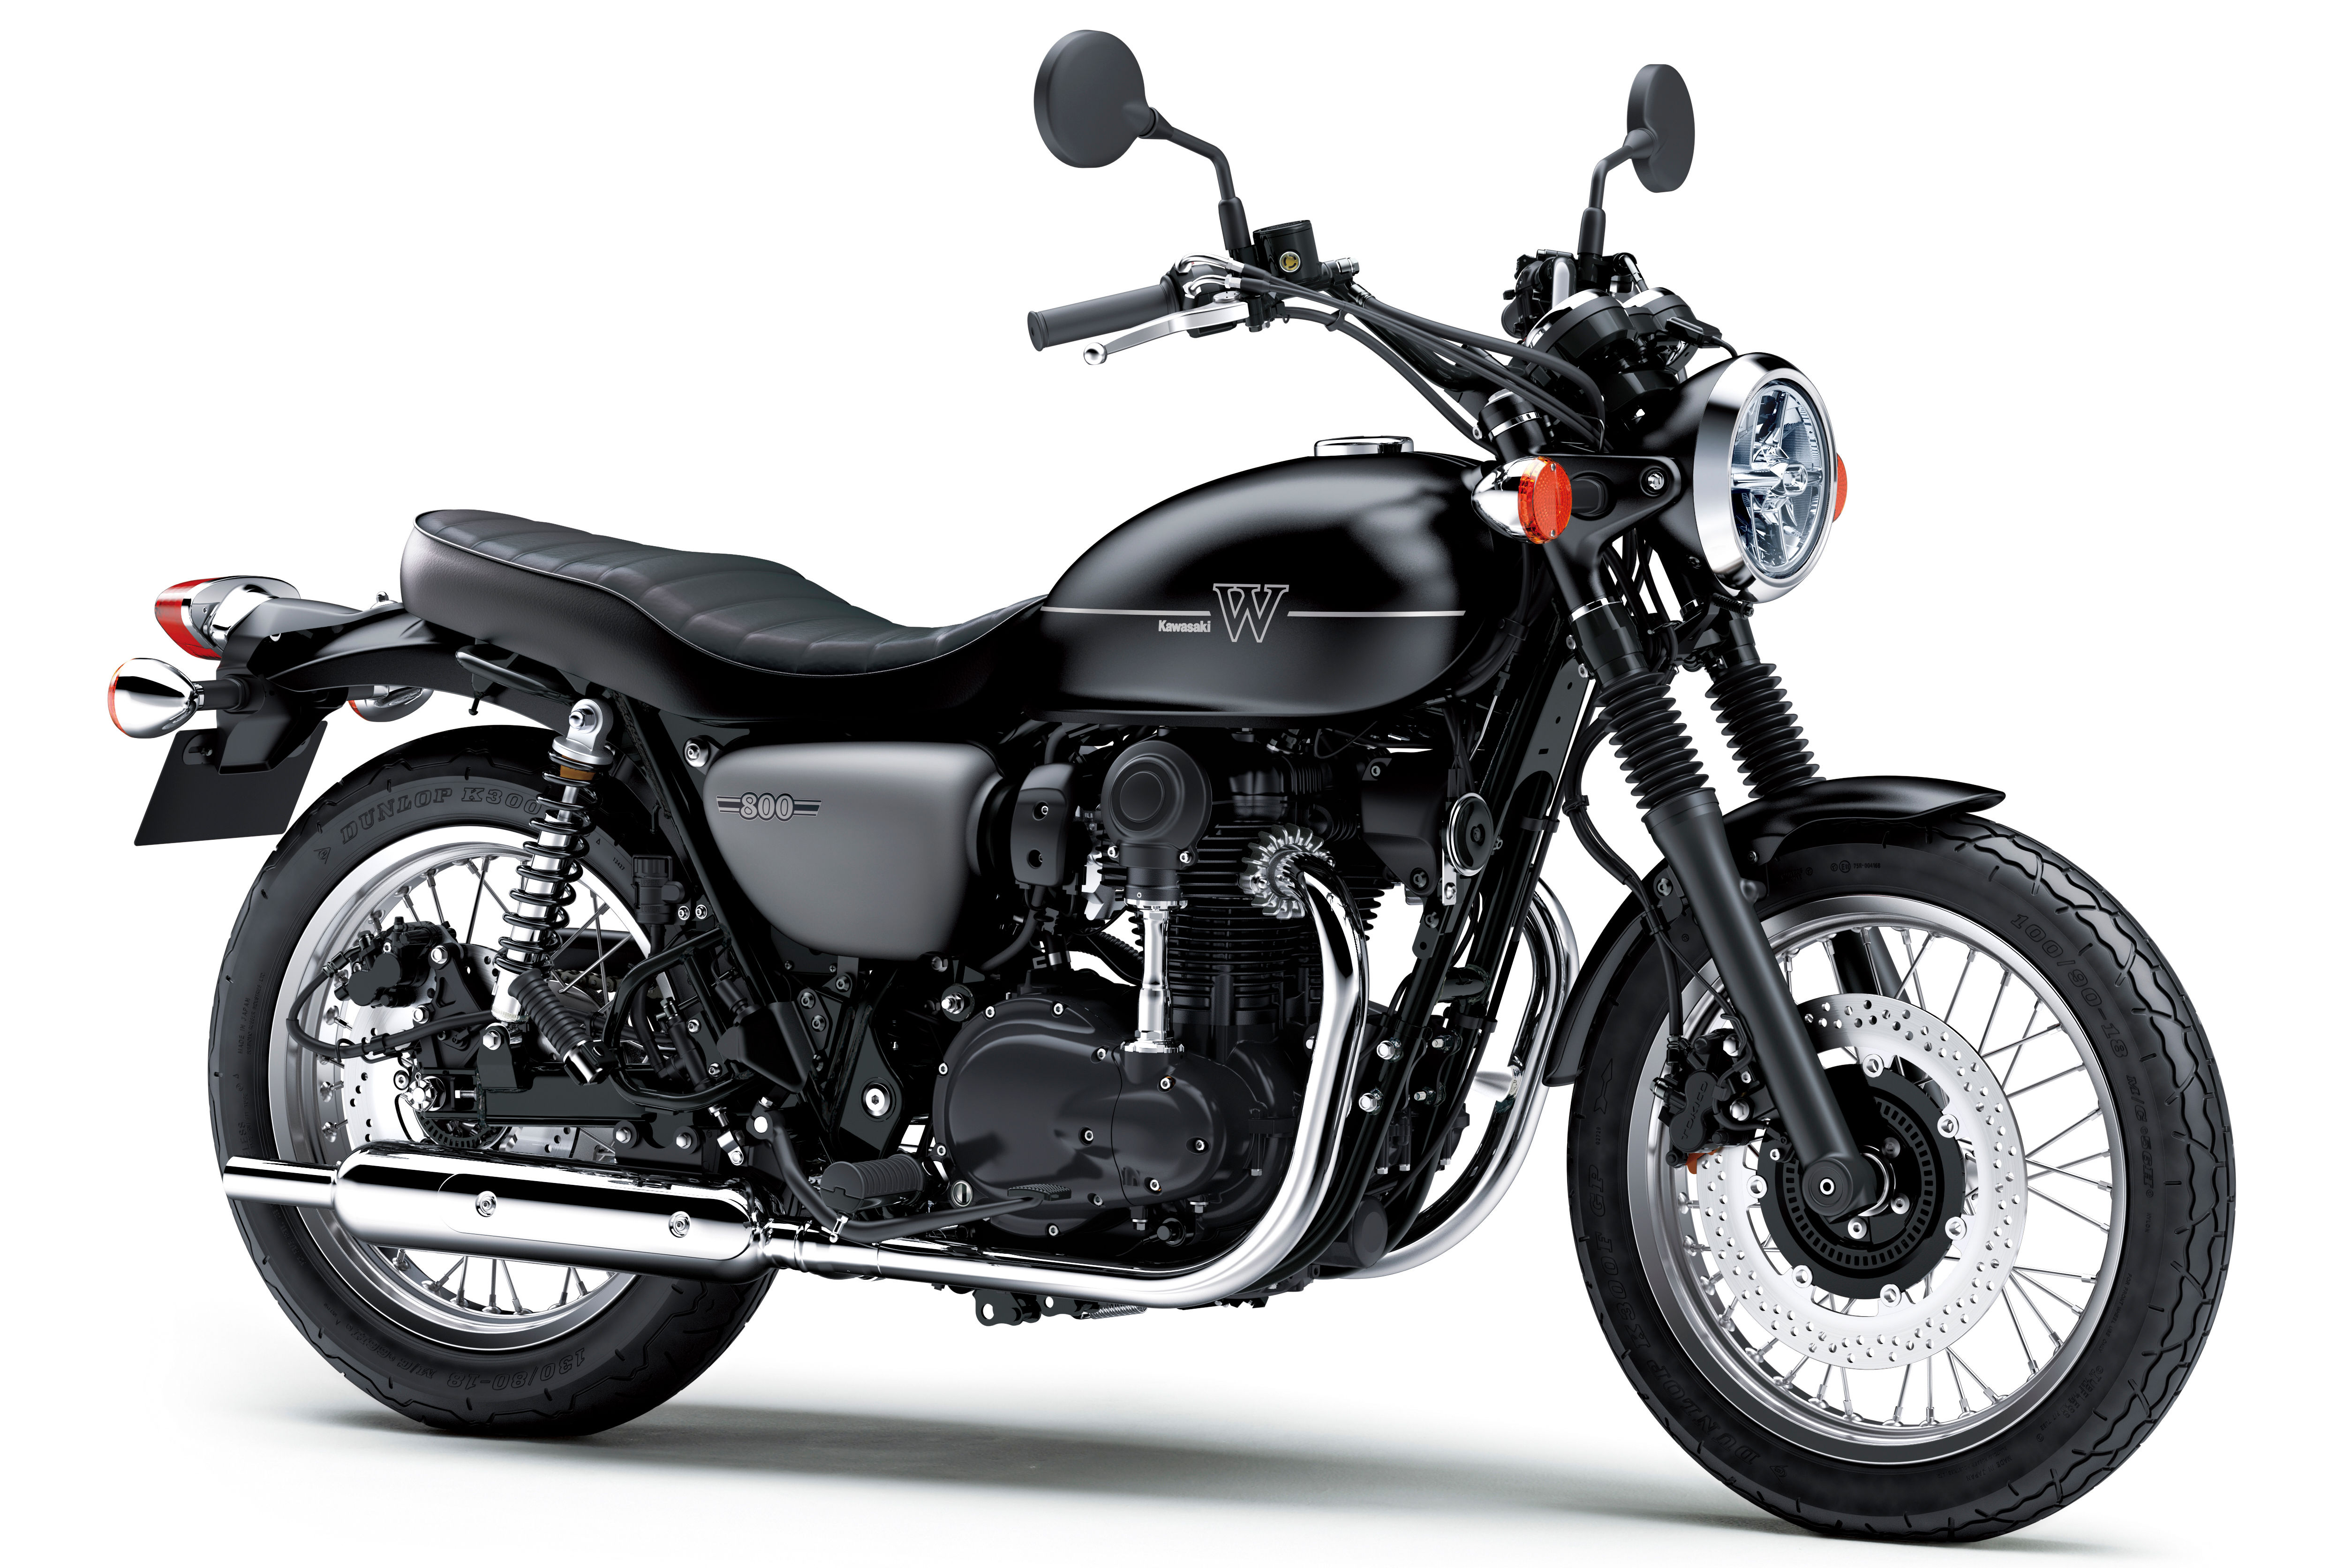 Kawasaki Launches W800 Street Retro Motorcycle In India